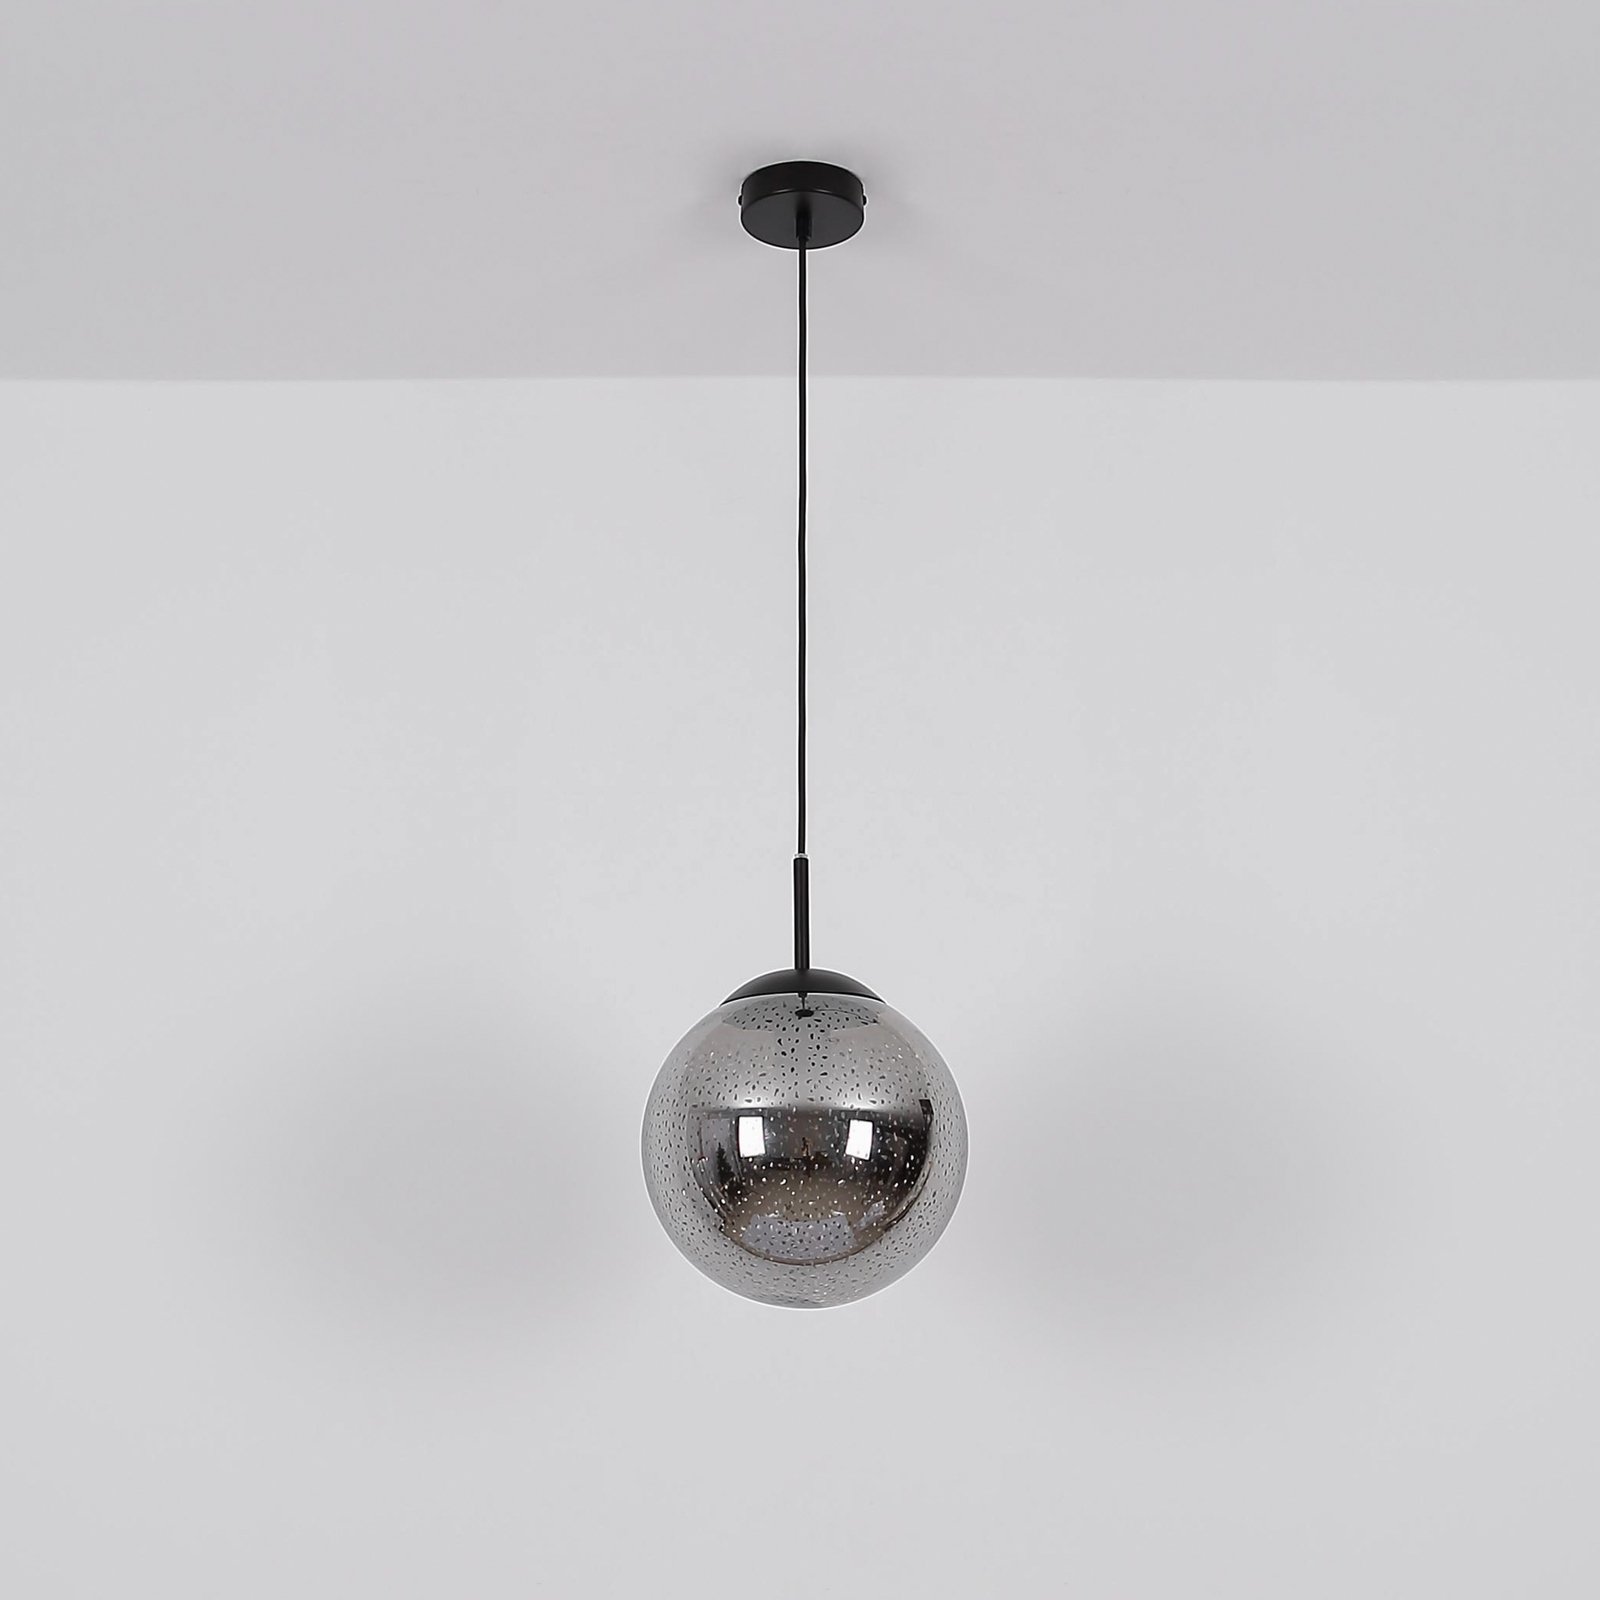 Hanglamp Samos, Ø 20 cm, rookgrijs/zwart, glas